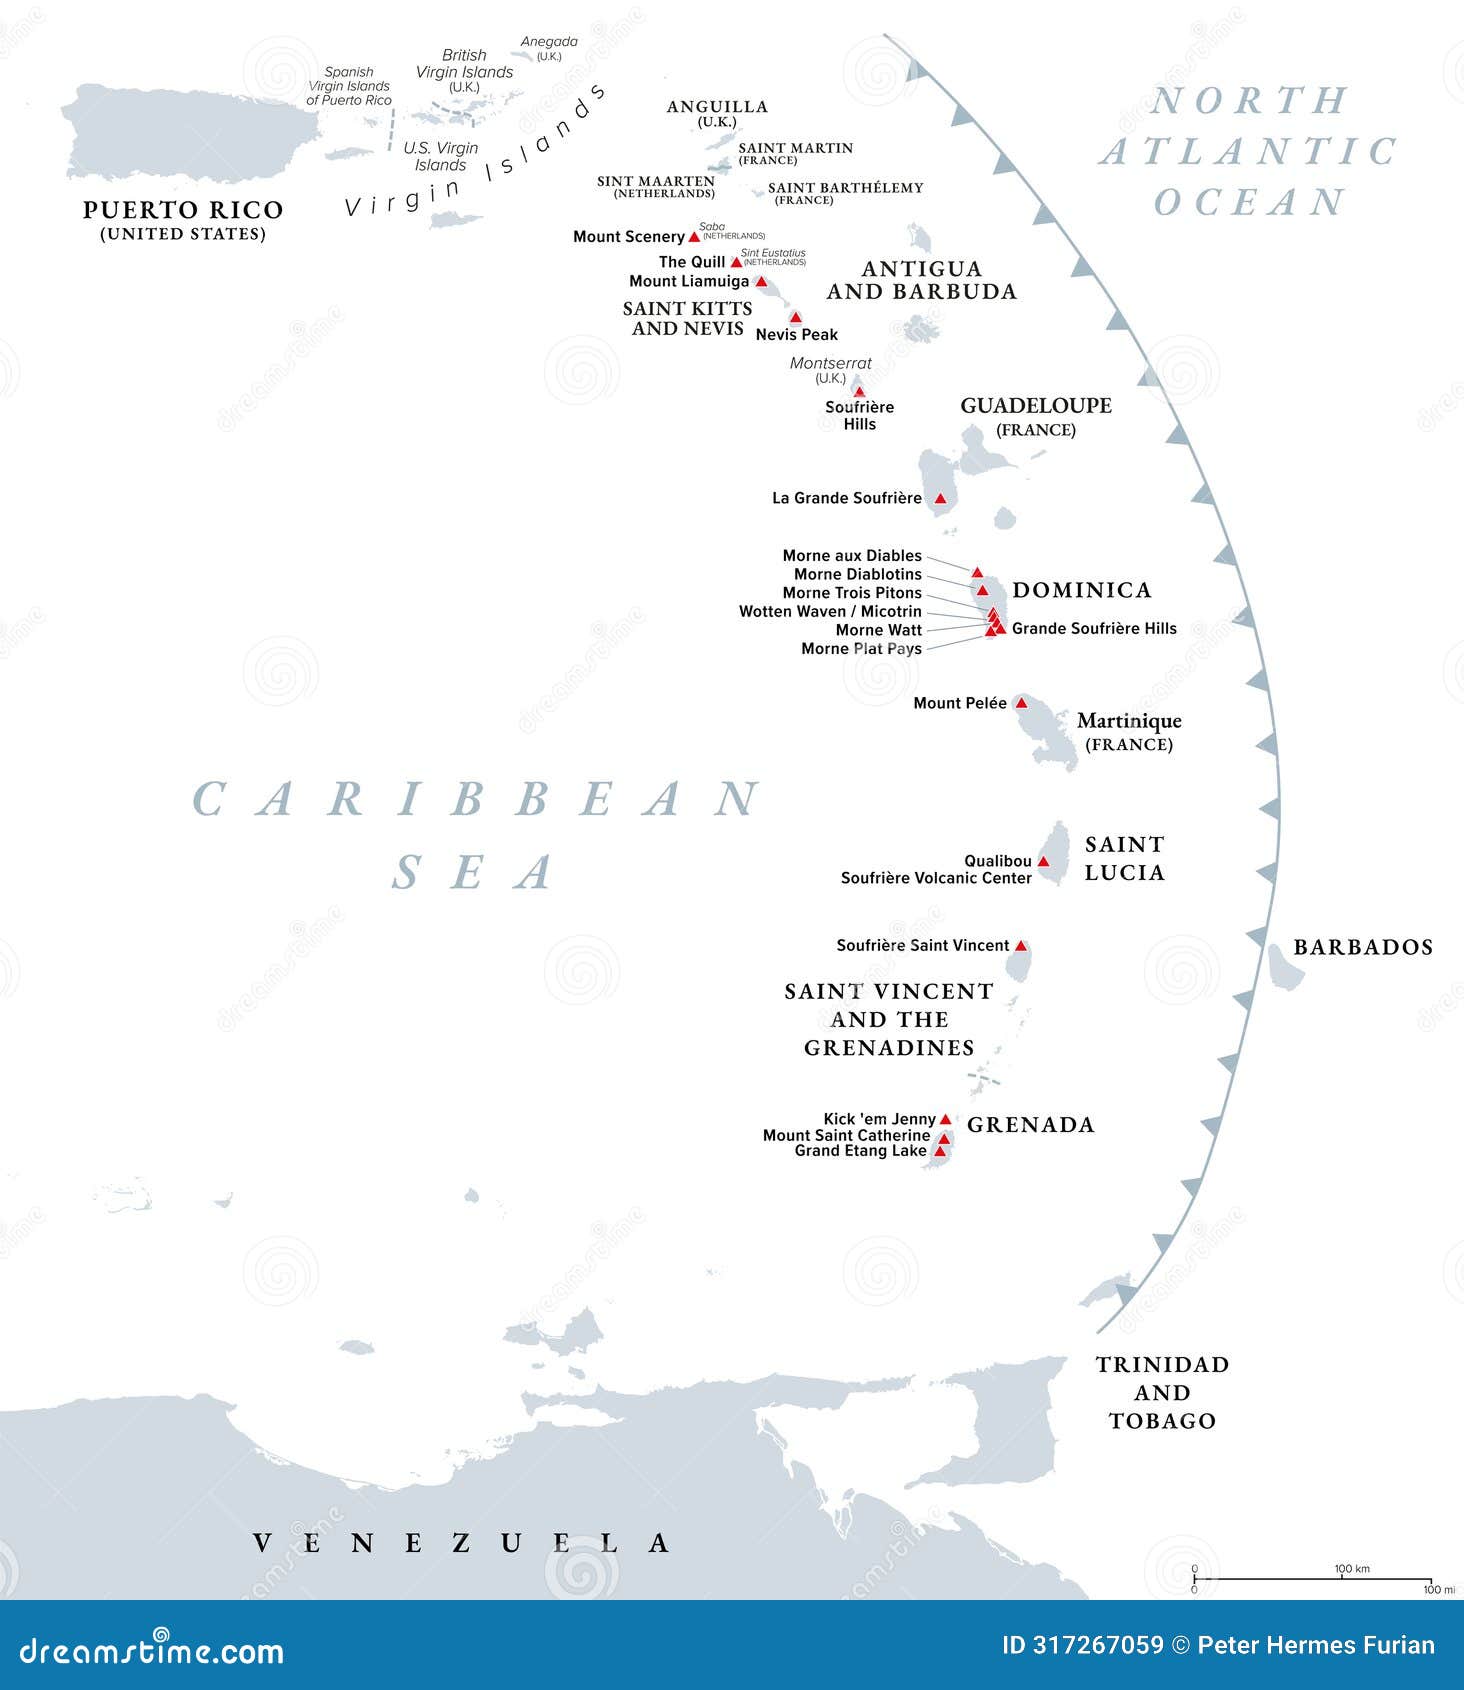 volcanoes of the caribbean islands, lesser antilles island arc, political map